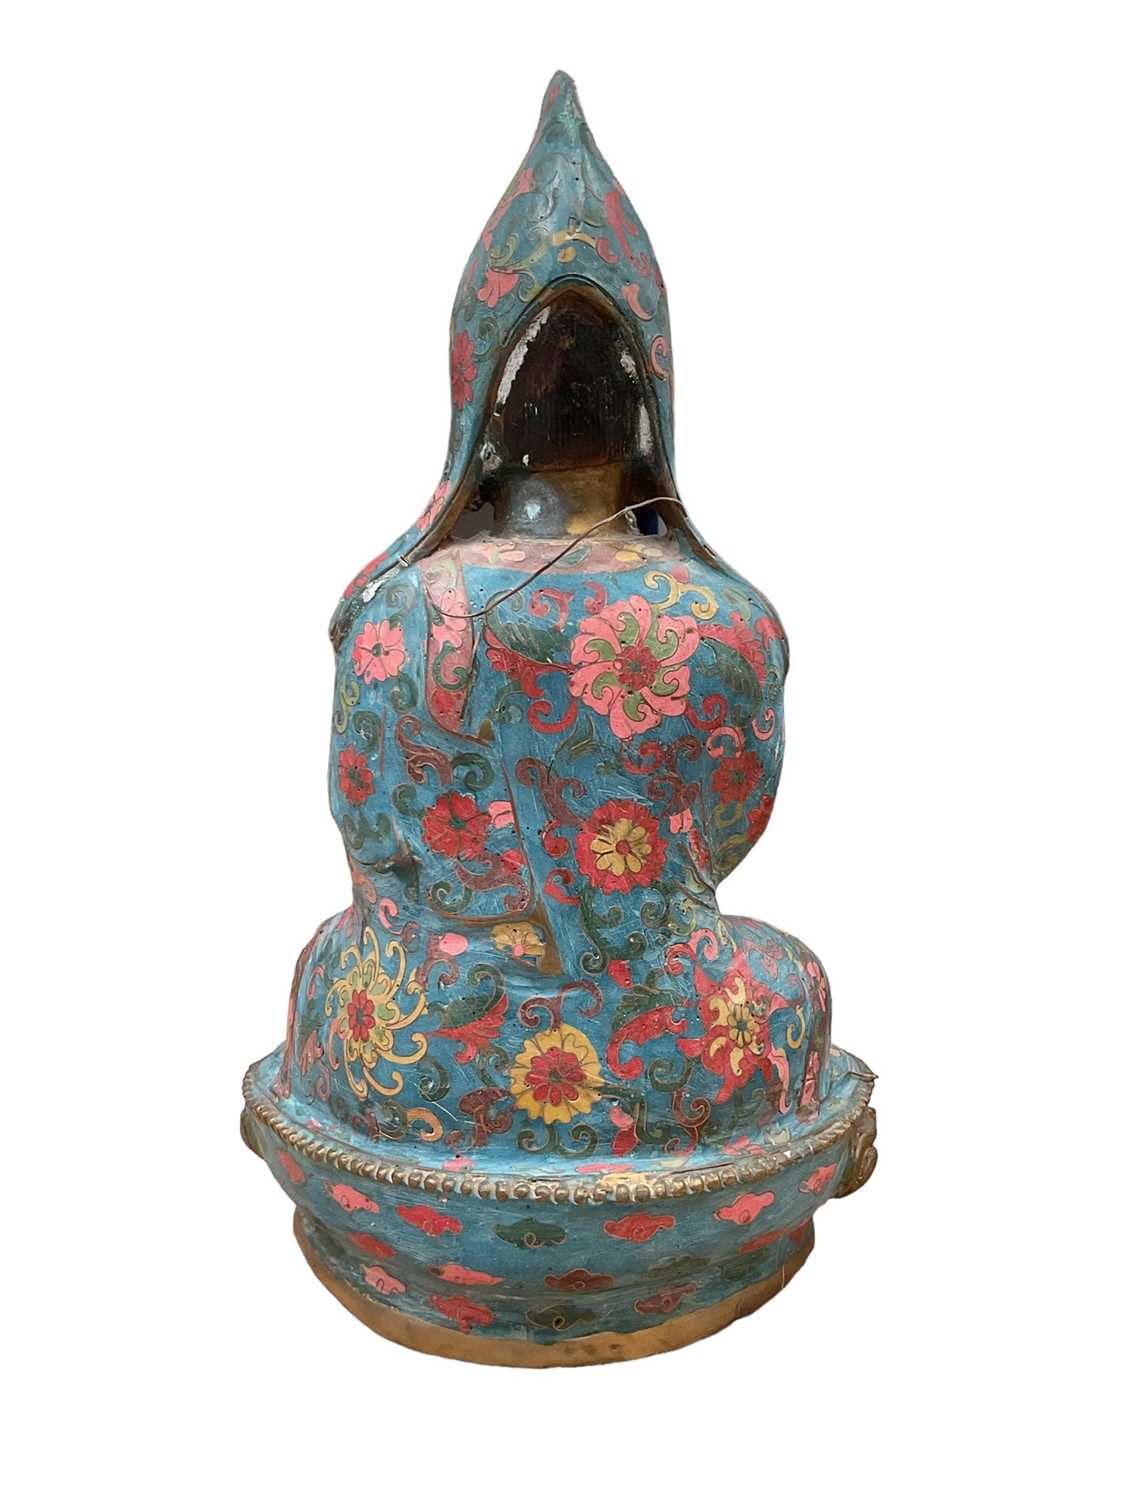 Tibetan cloisonné Buddha, 37cm high - Image 2 of 2